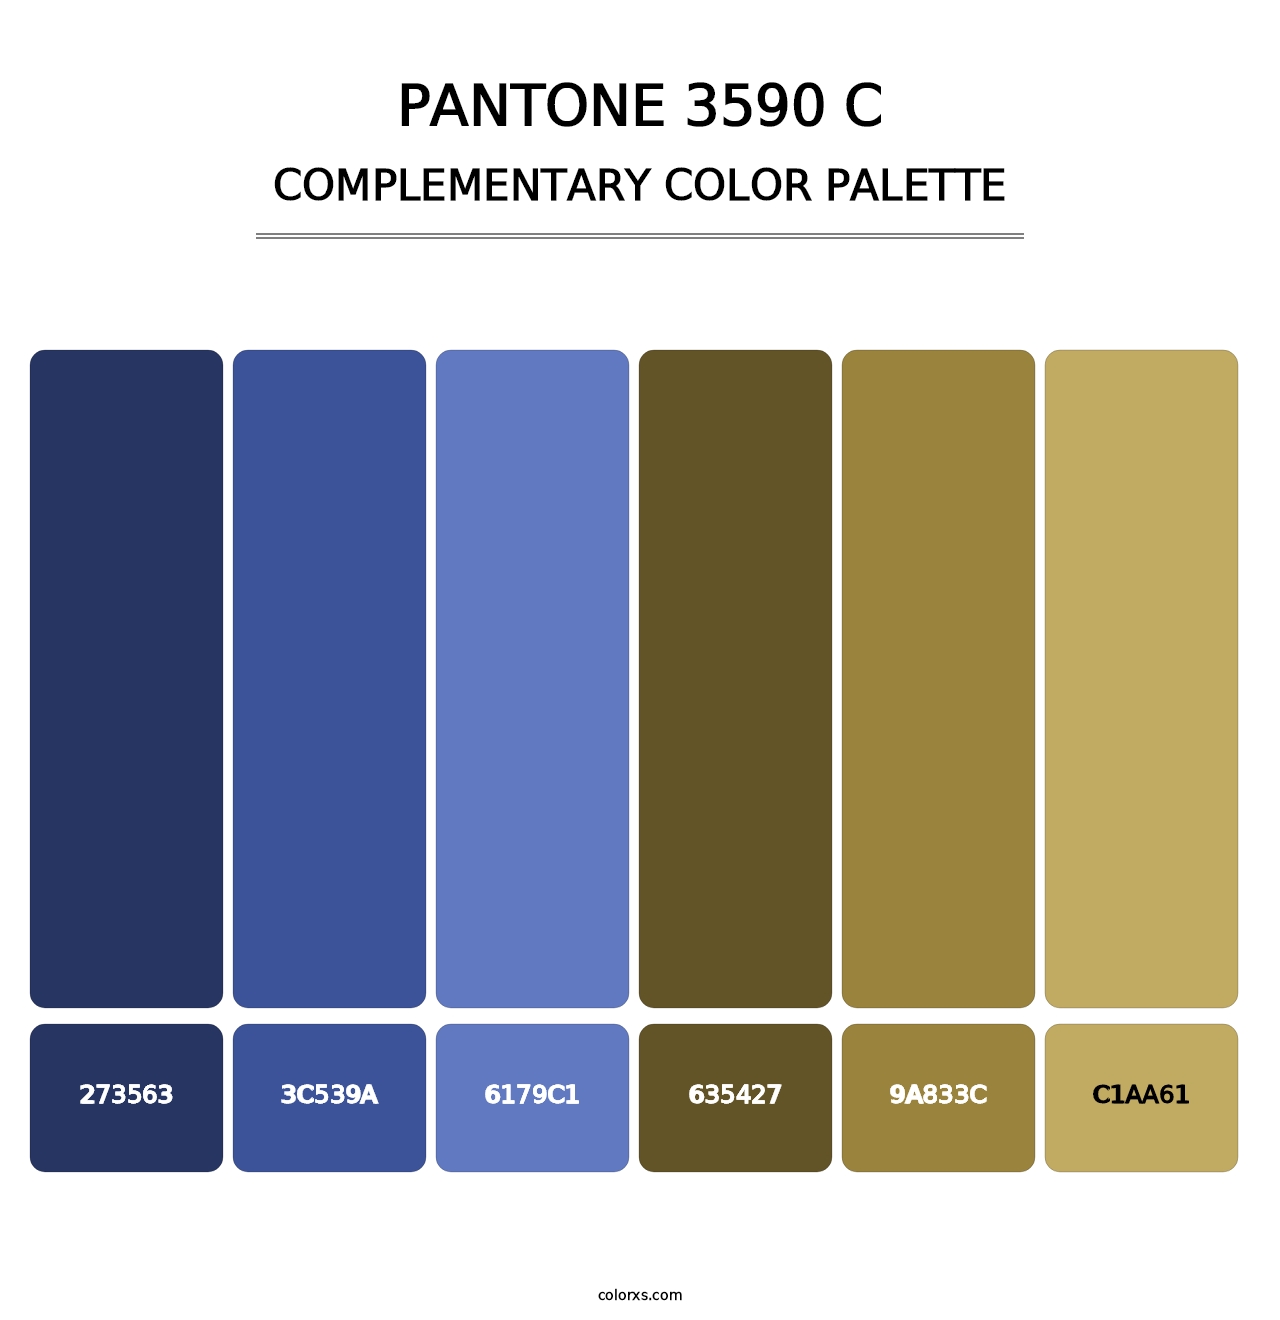 PANTONE 3590 C - Complementary Color Palette